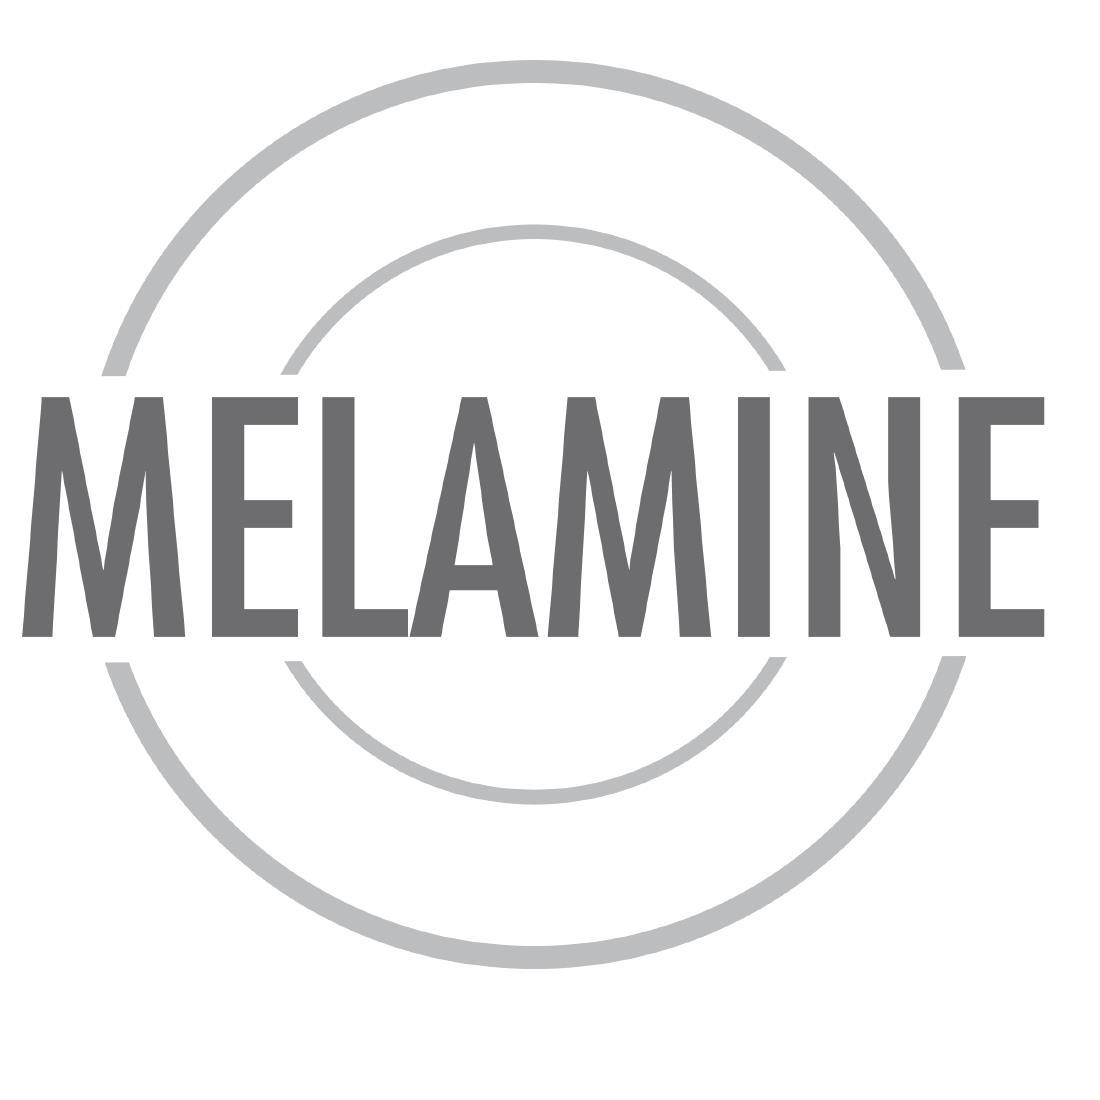 Melamine Blue Rectangular Placemat - F639  - 2